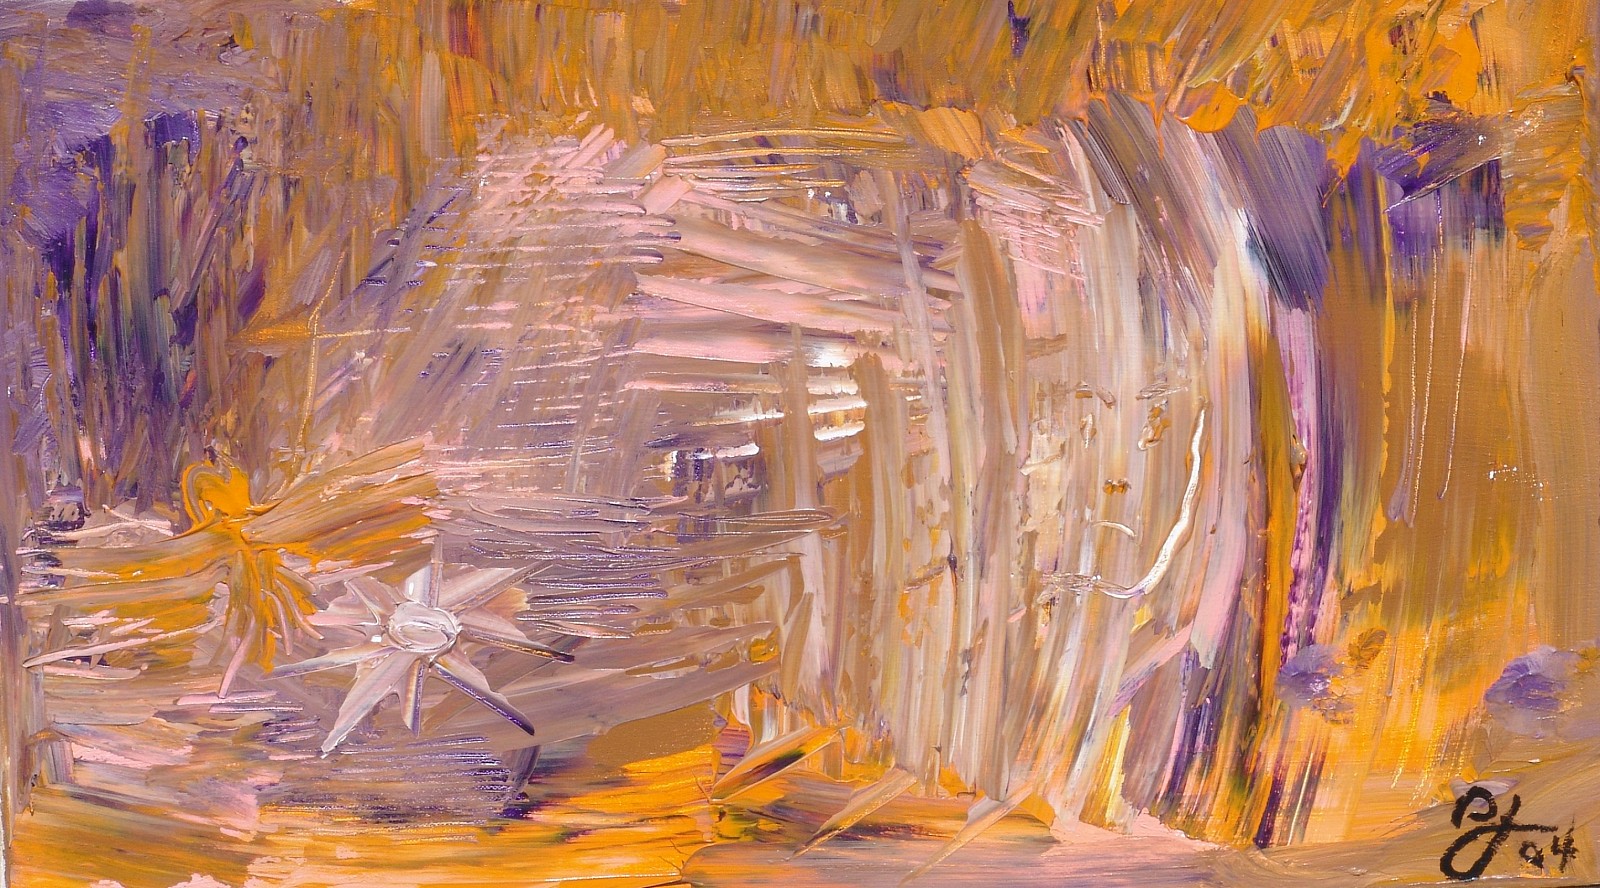 Diego Jacobson, Harmonies of spirit, 2004
Acrylic on Canvas, 14 x 22 in. (35.6 x 55.9 cm)
0648